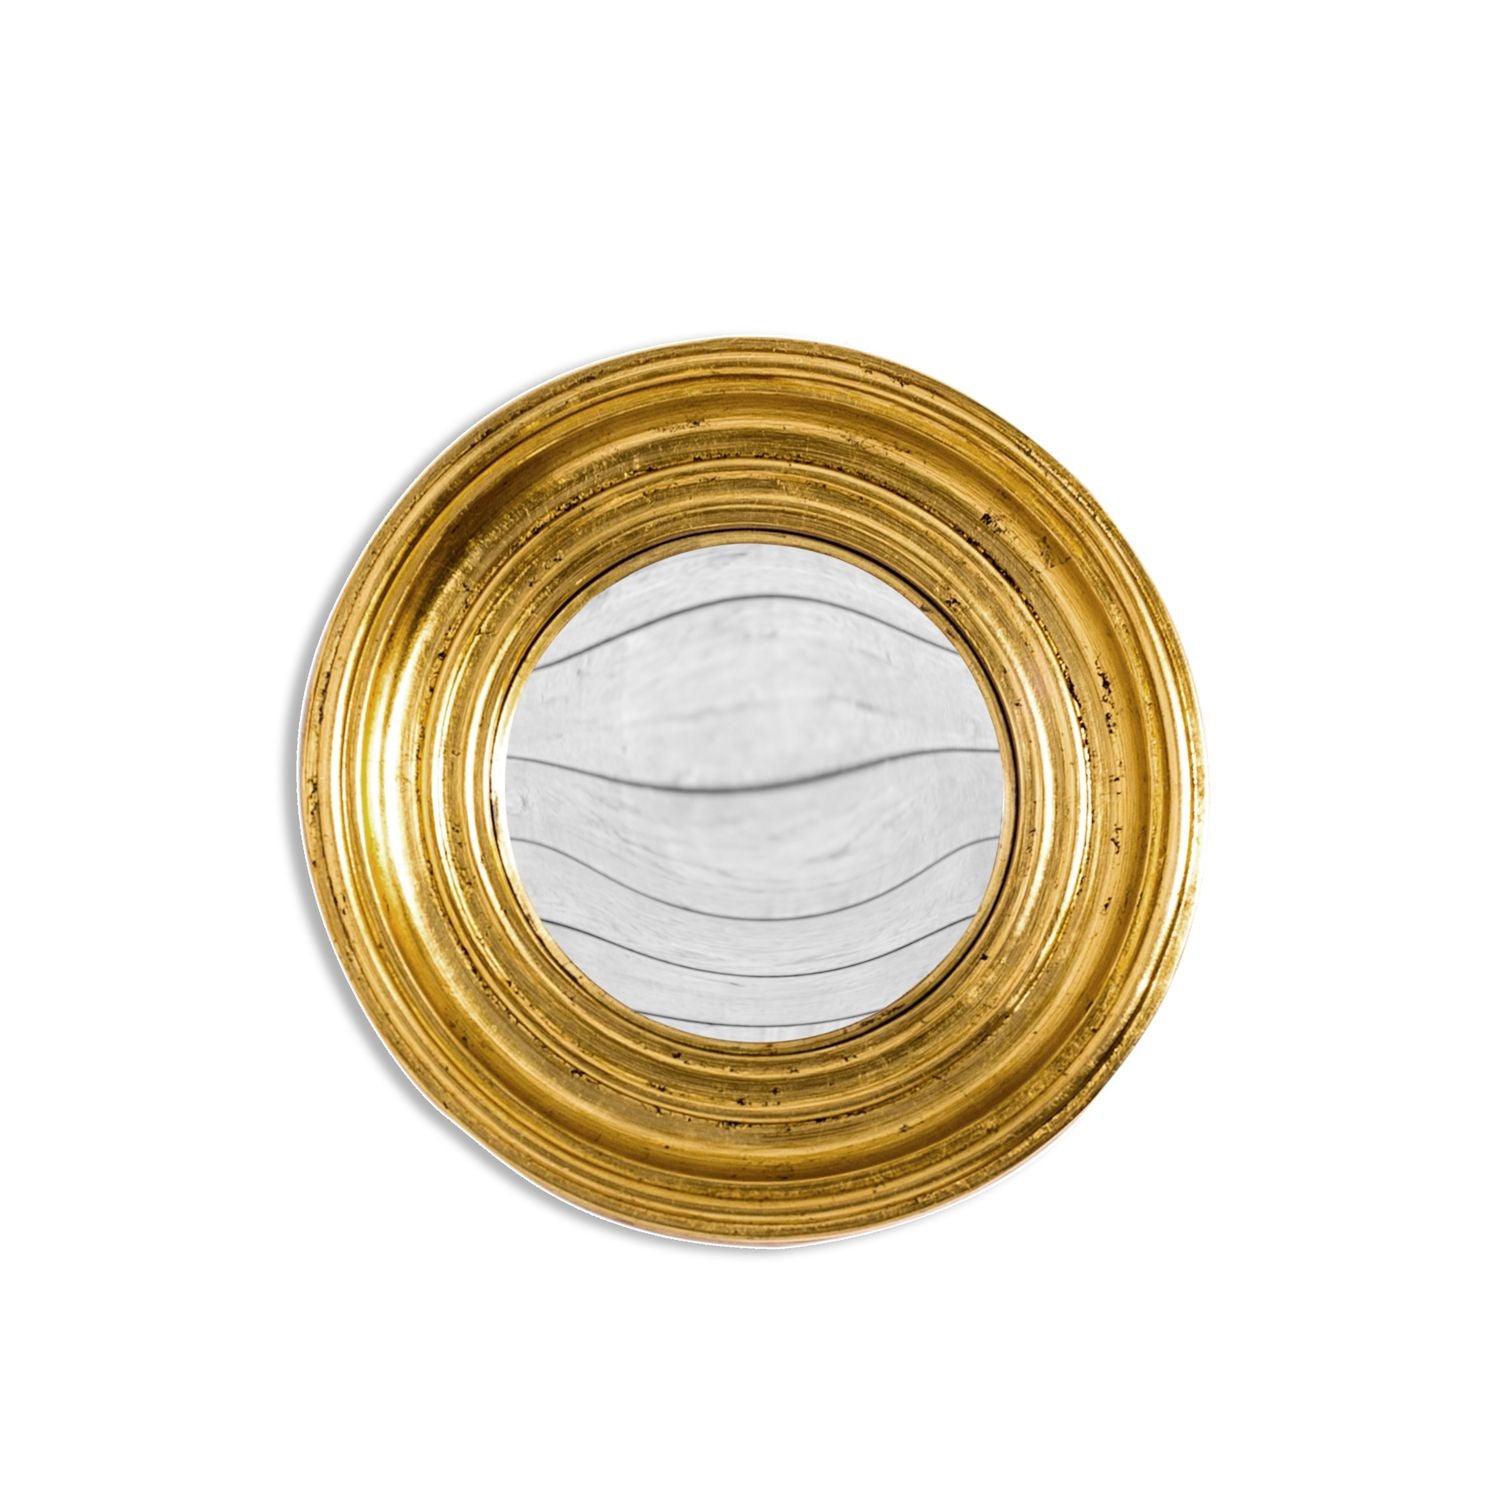 Antique Gold Convex Mirror - Small